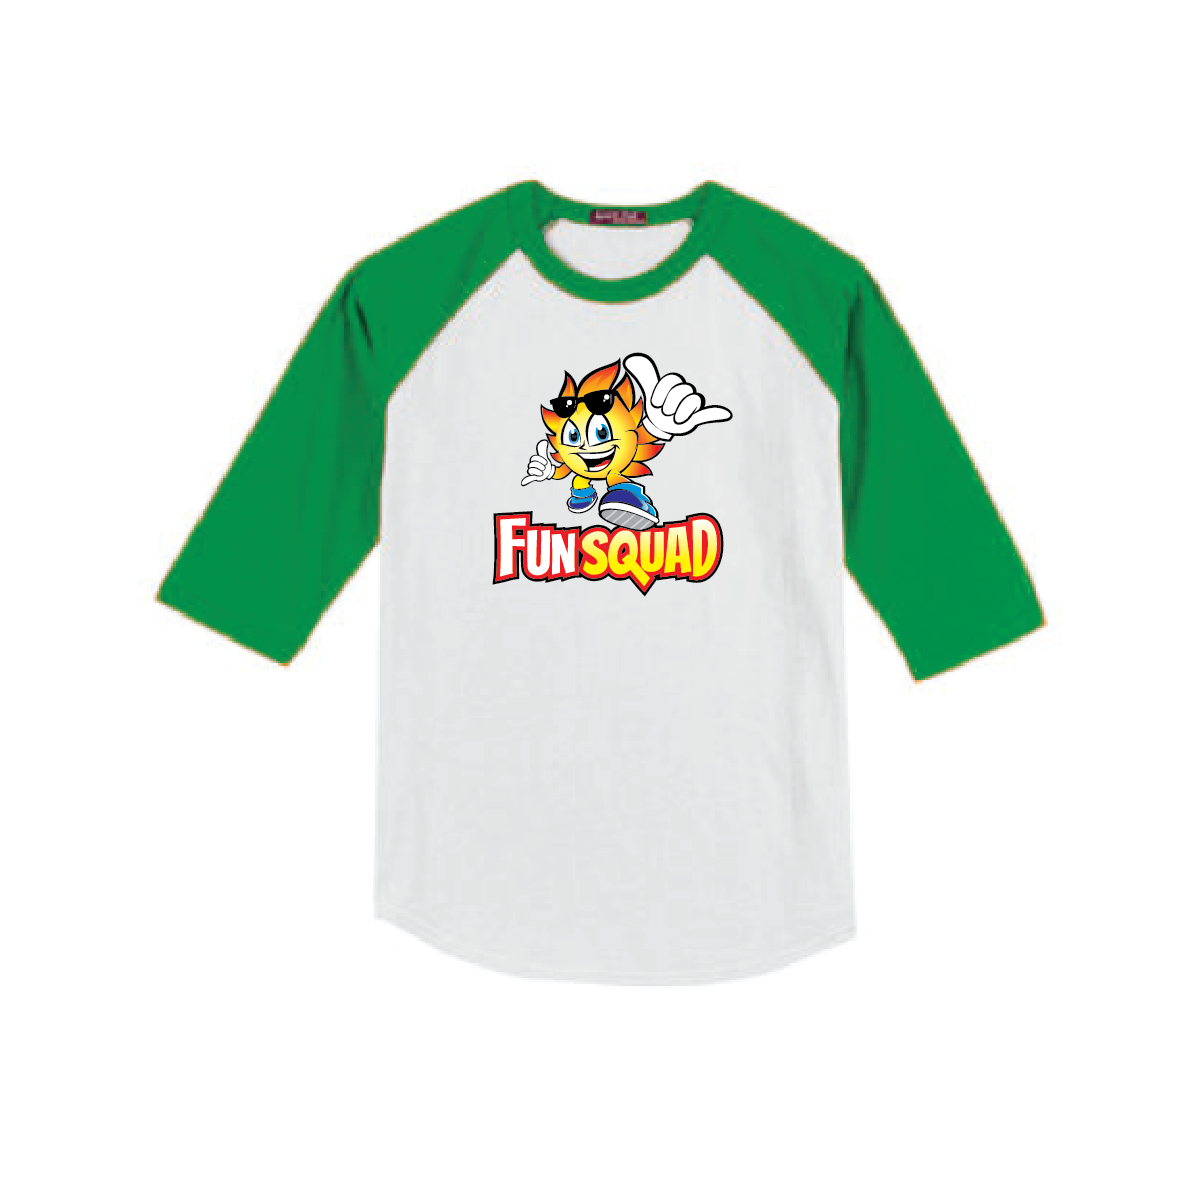 T-shirt Raglan - Sunny Boy Original